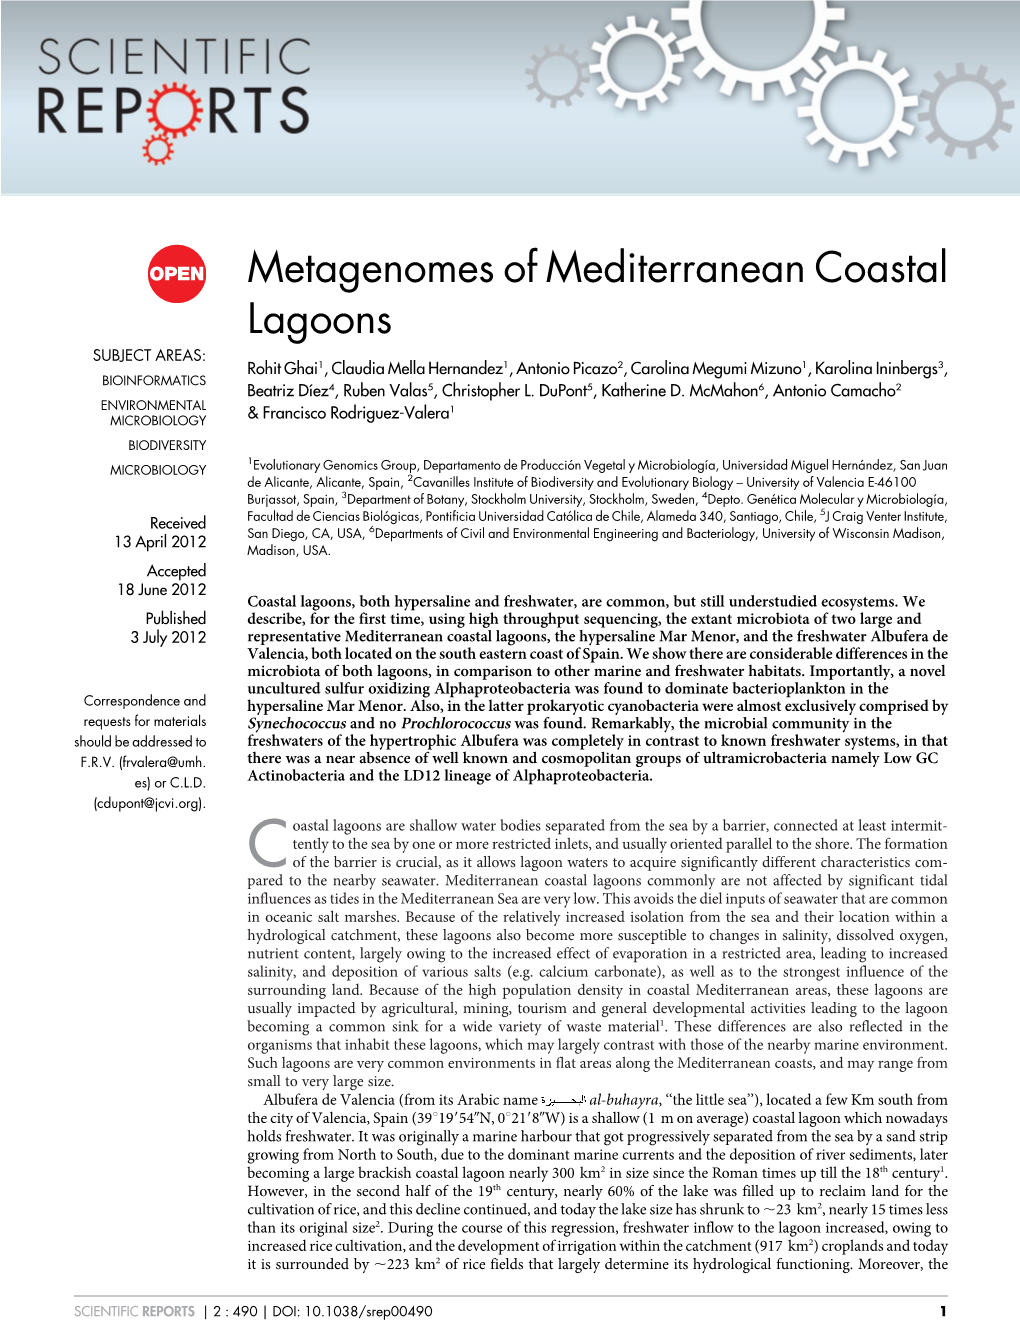 Metagenomes of Mediterranean Coastal Lagoons